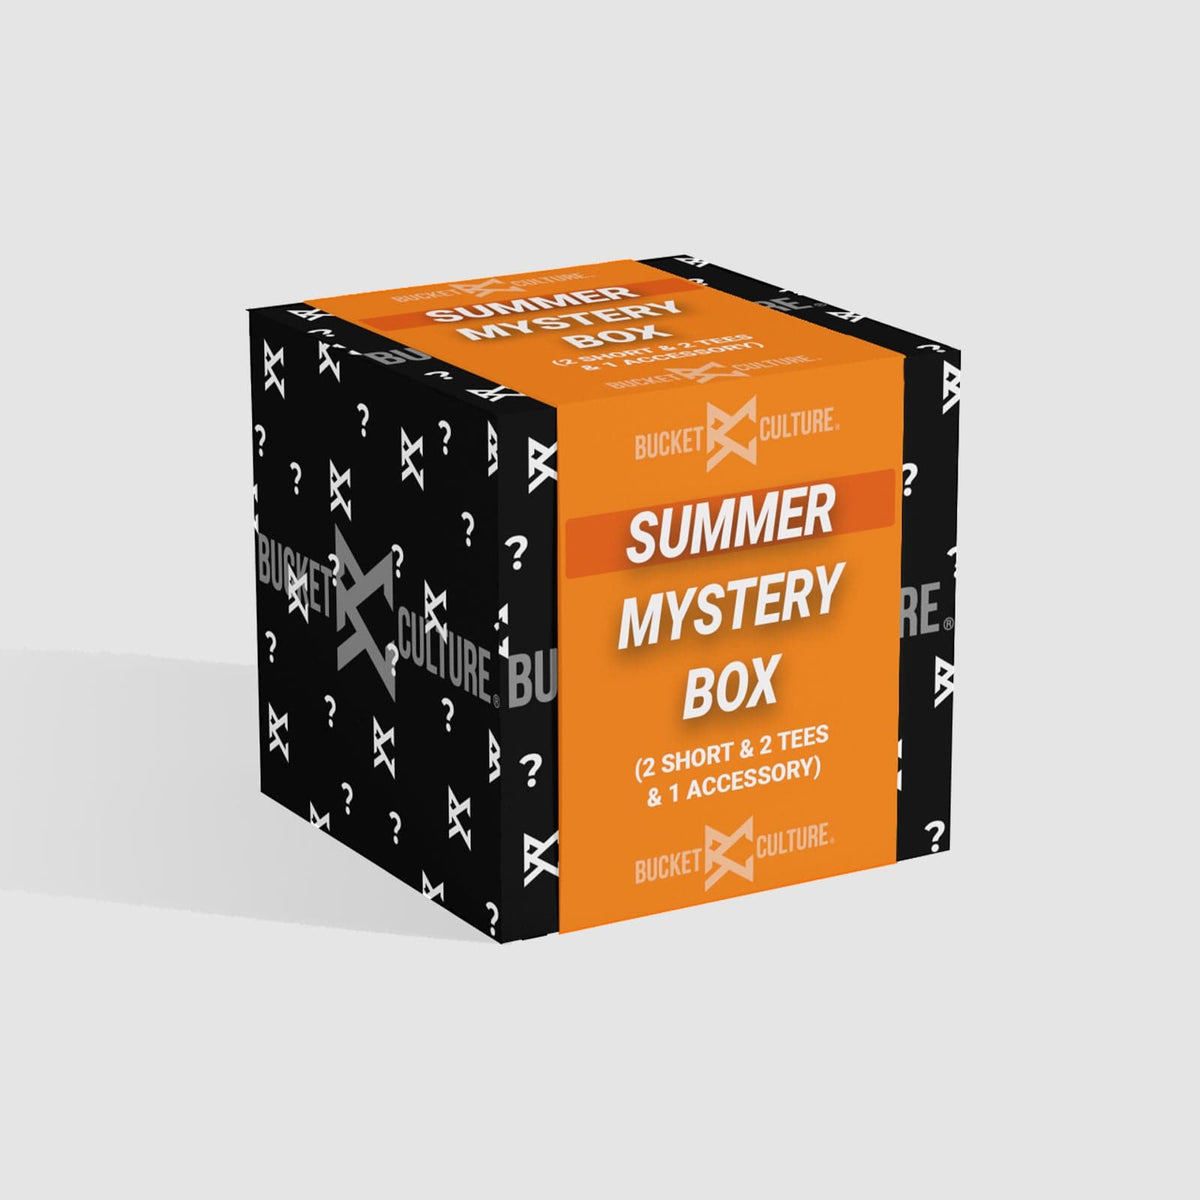 Summer Mystery Box Bundle (2 Shorts & 2 Tees & 1 Accessory)